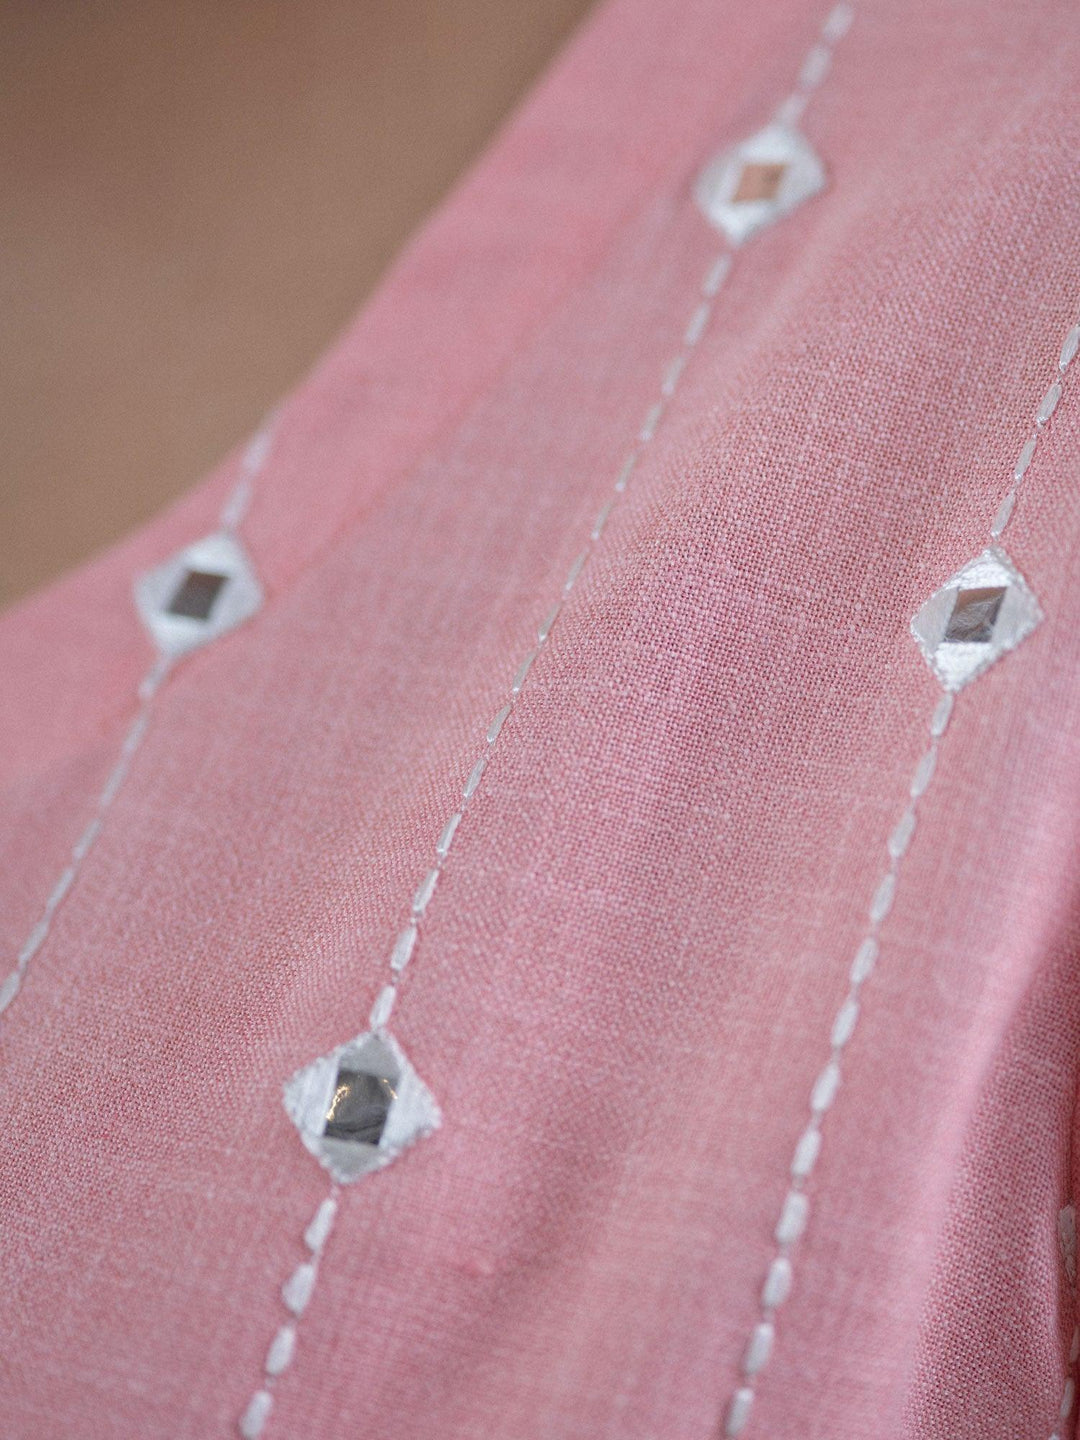 Plus Size Pink Embroidered Cotton Kurta - Libas